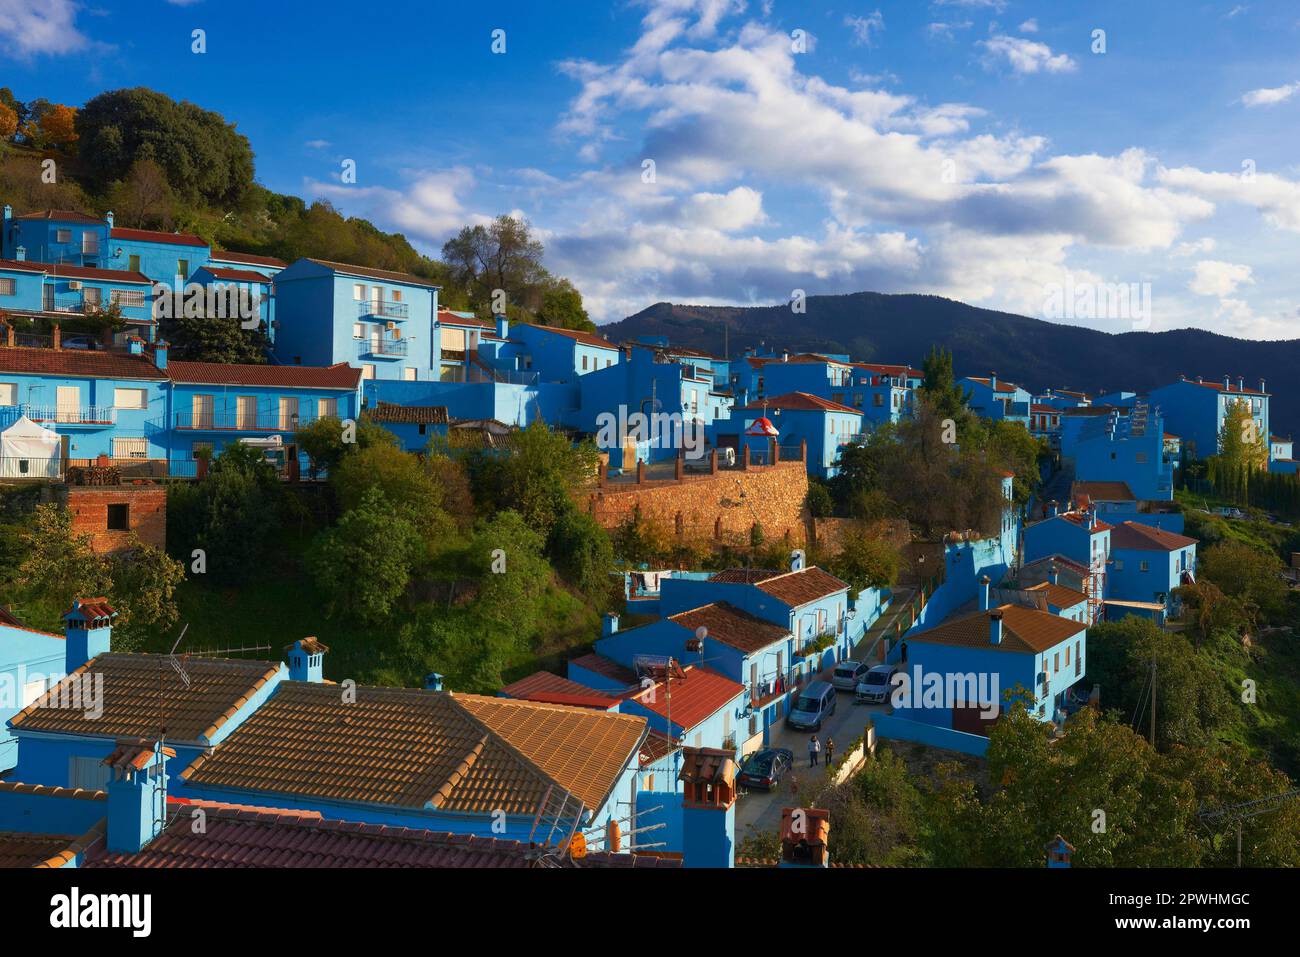 Juzcar, Genal Valley, Genal River Valley, Serrania de Ronda, Smurf Village, Provinz Malaga, Andalusien, Spanien Stockfoto